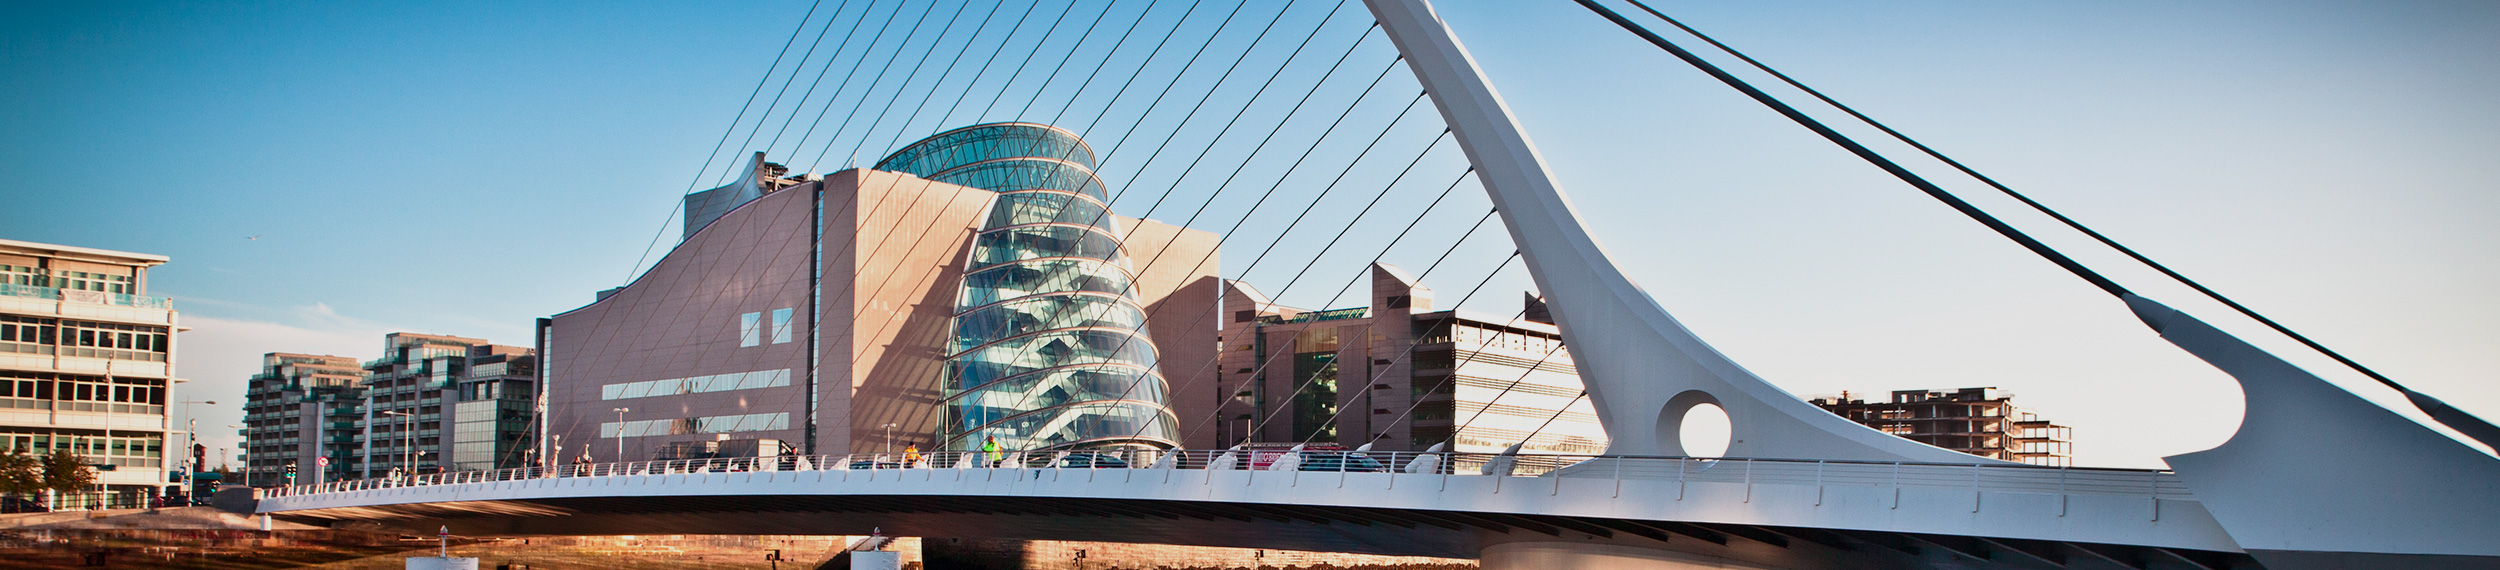 Samuel Beckett Bridge over the River Liffey with the Convention Centre, Dublin.